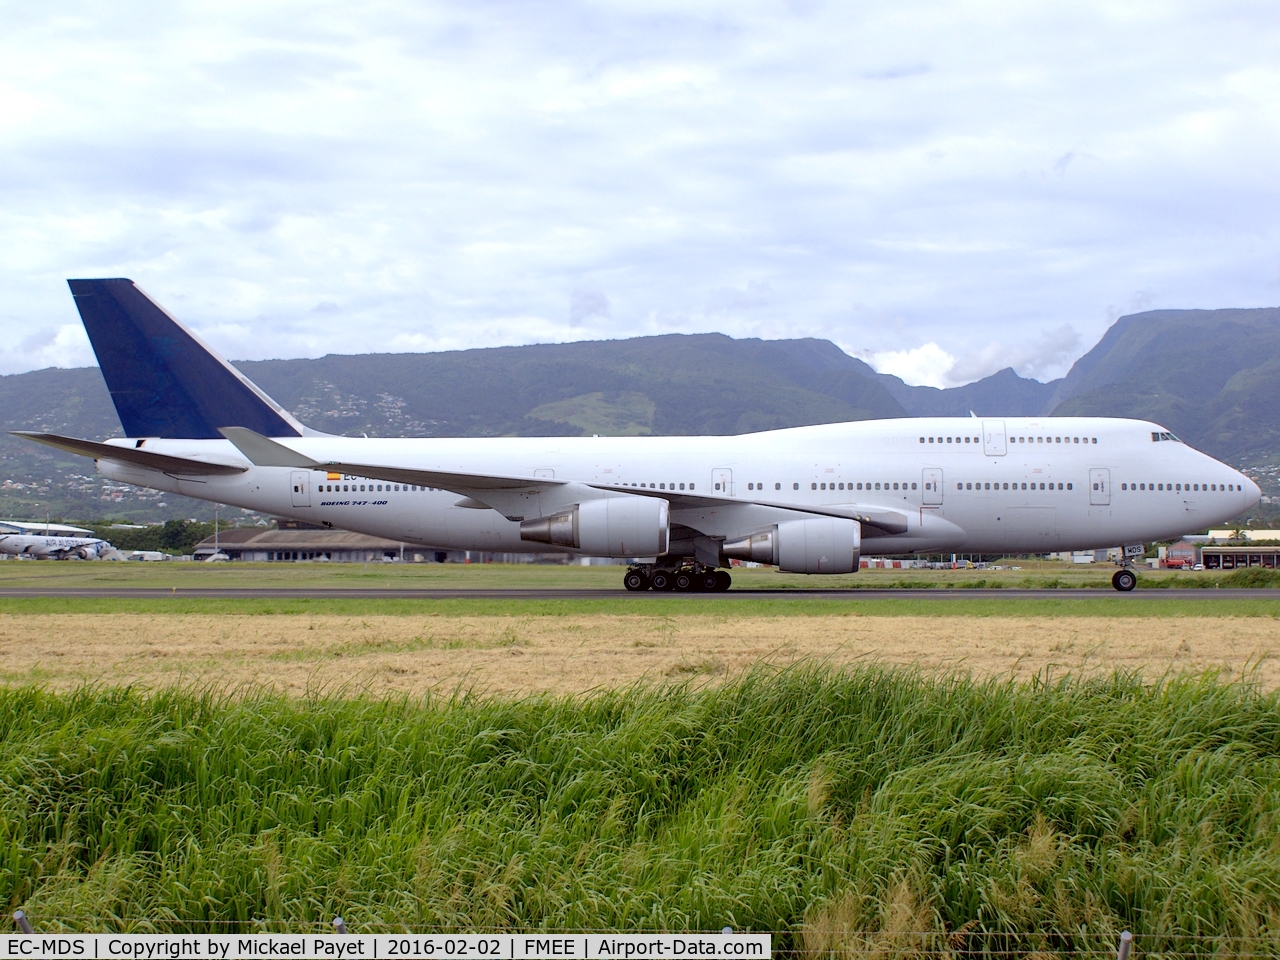 EC-MDS, 1998 Boeing 747-419 C/N 26910, Flying for Air Austral